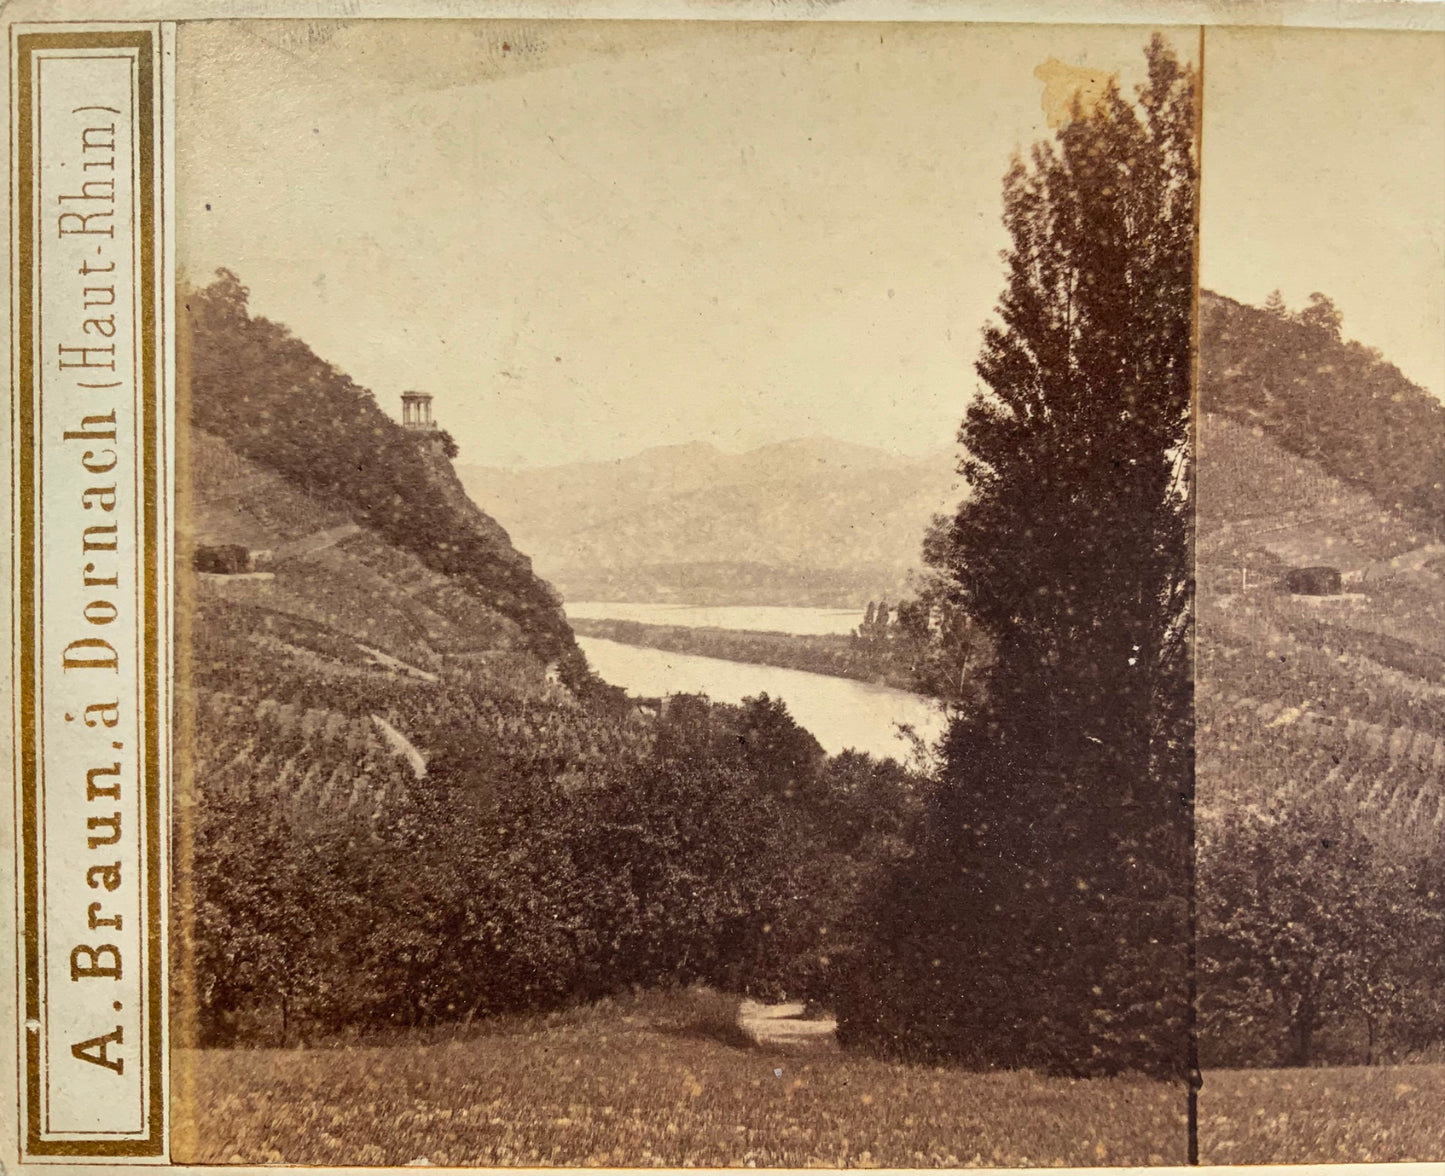 1860 Adolphe Braun, Rolandseck, Germania, fotografia stereo